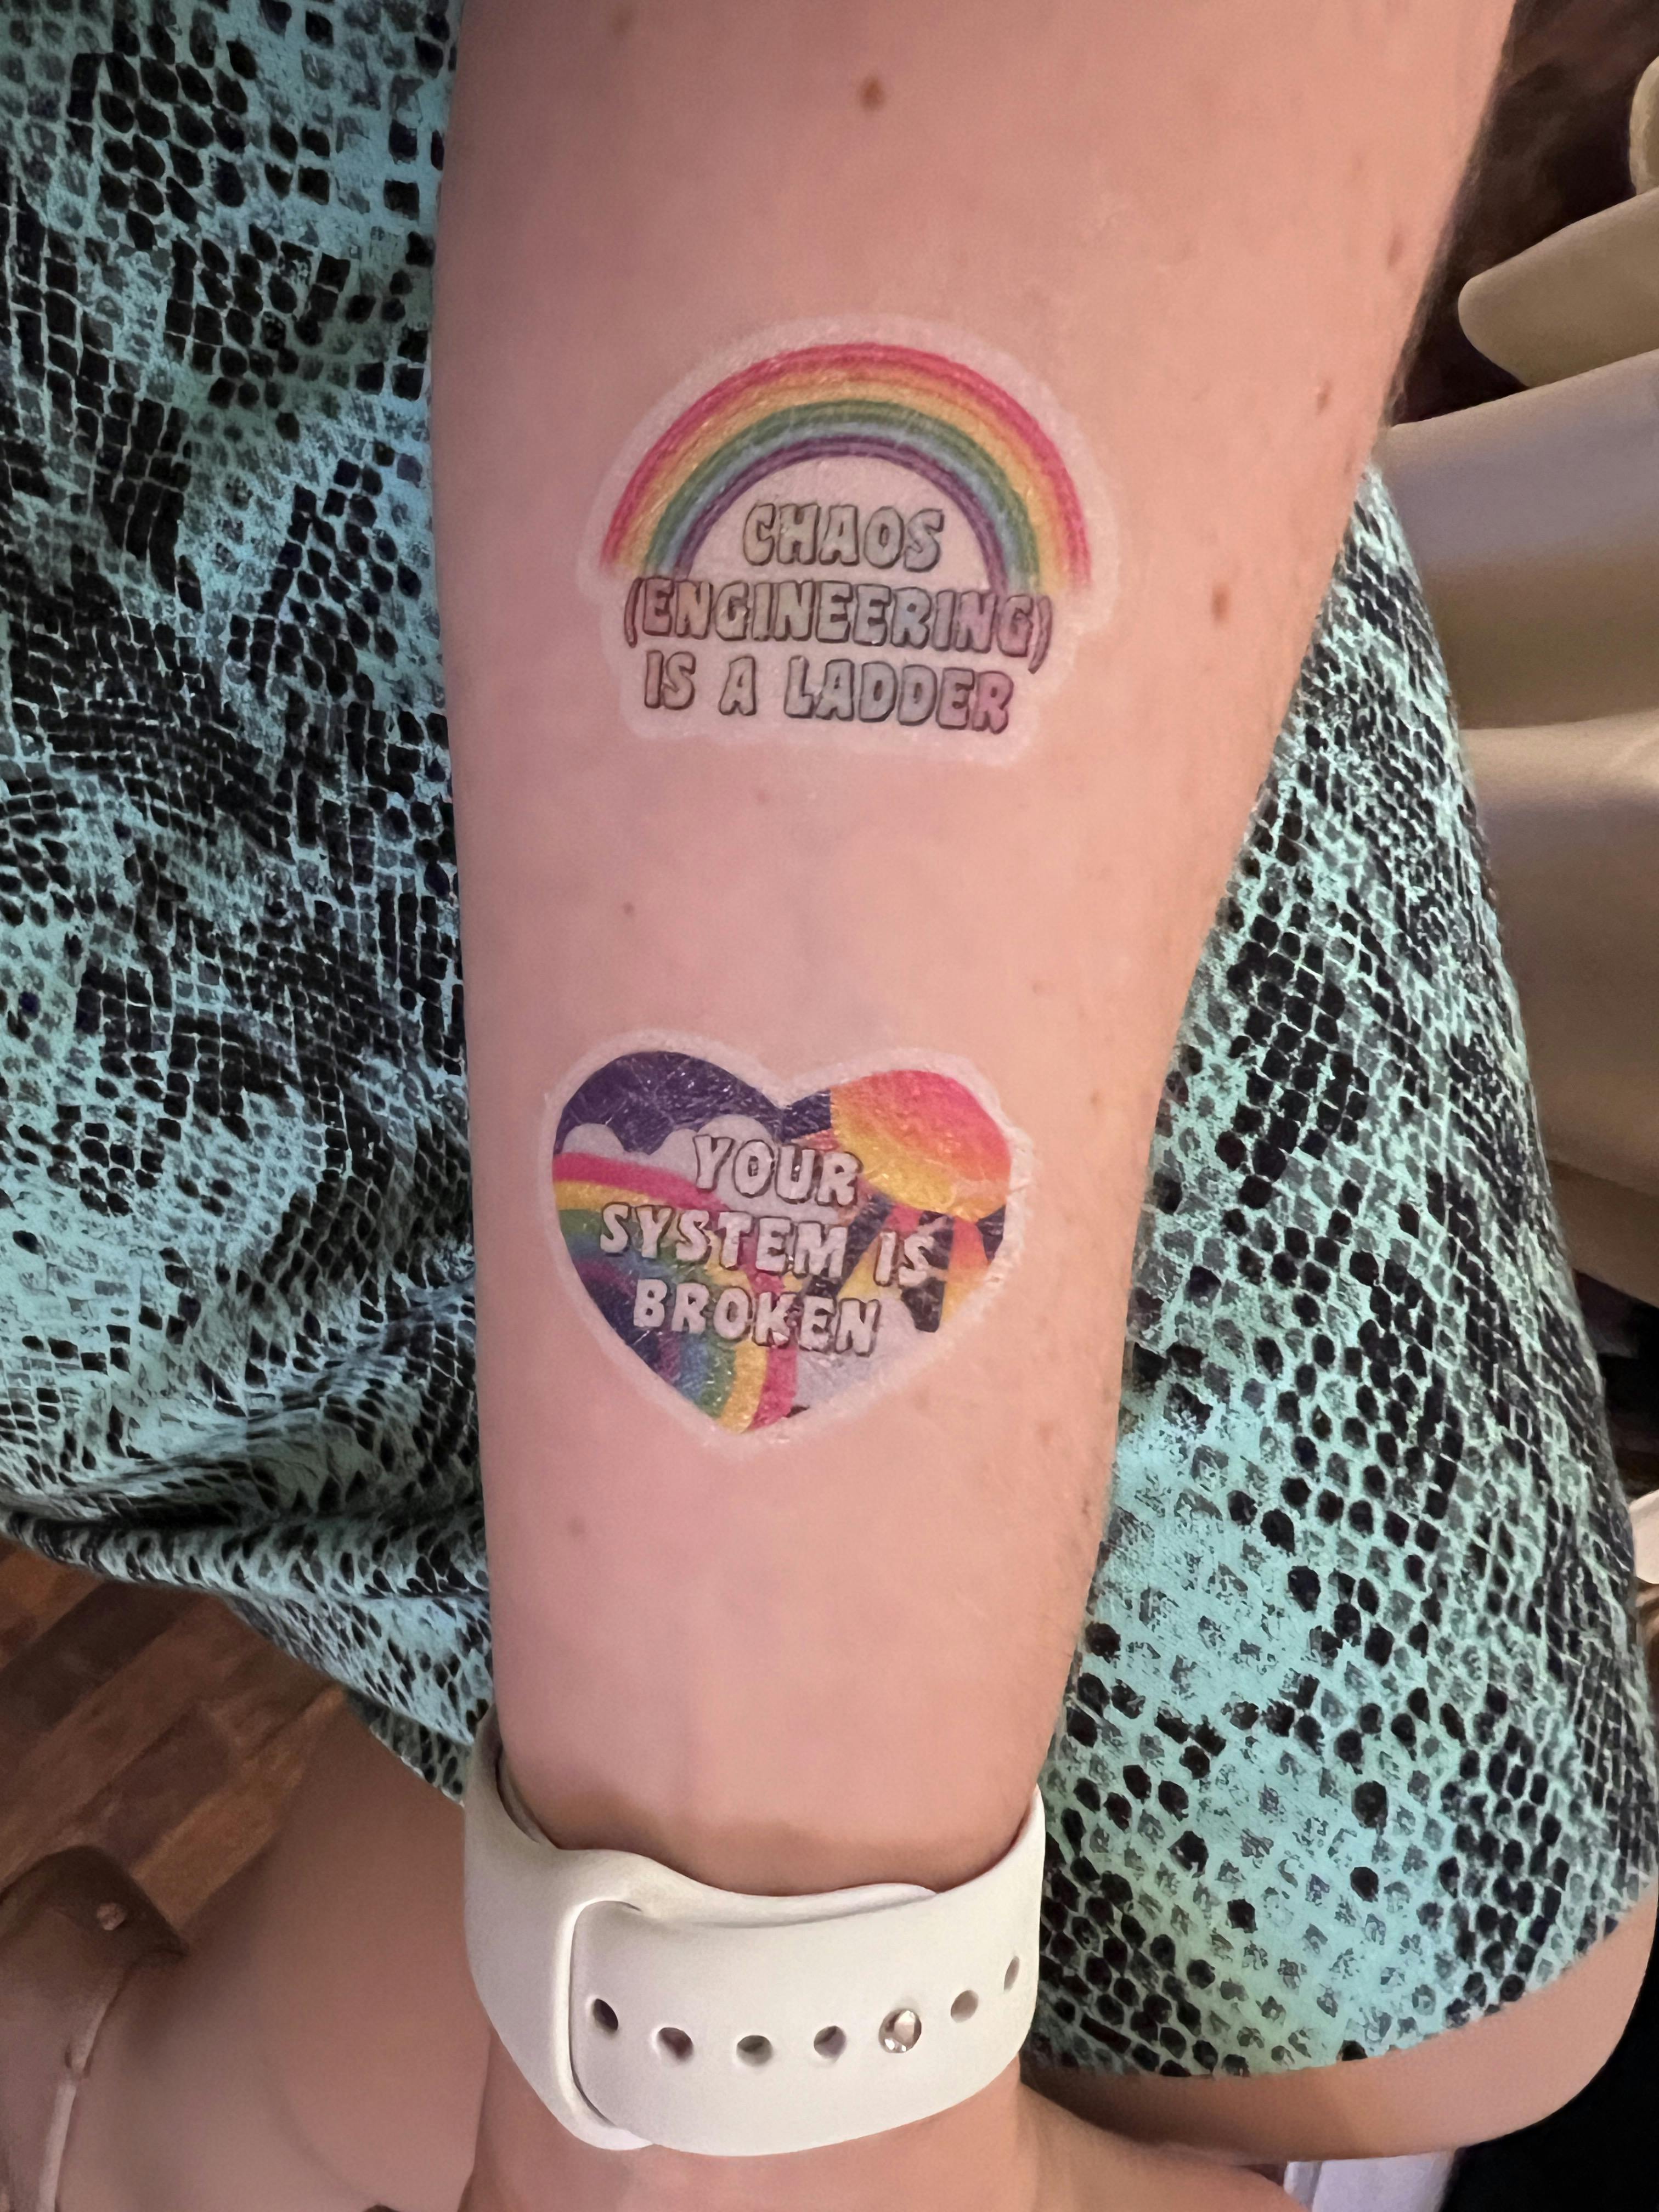 Fake tattoos on Julia's arm